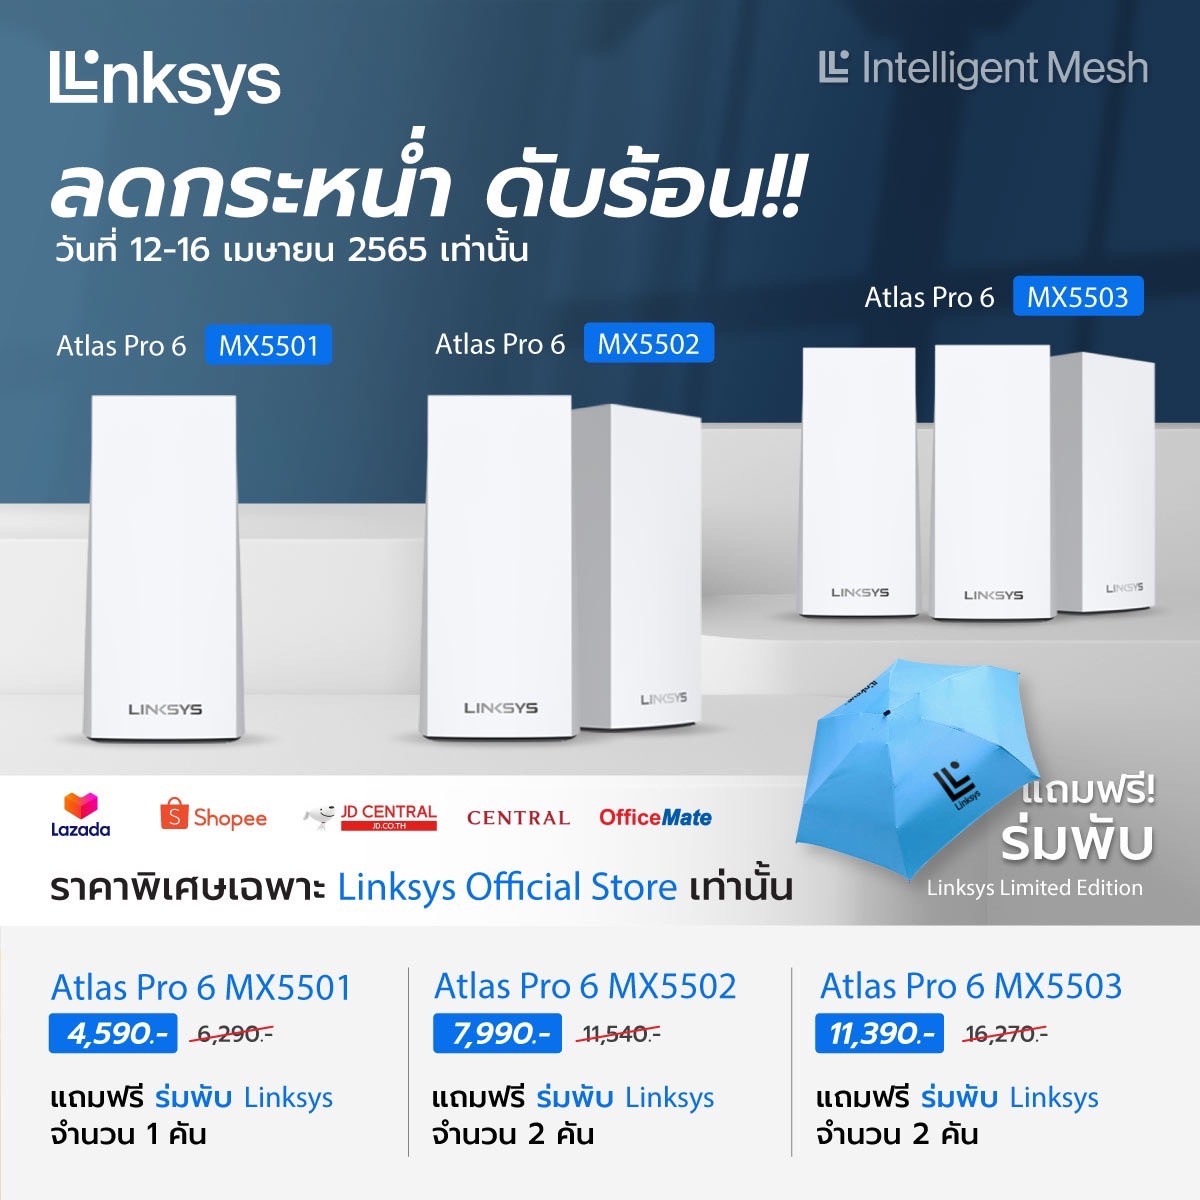 Linksys จัดเต็มโปรโมชั่นรับซัมเมอร์กับแคมเปญ Linksys Summer Sale ลดกระหน่ำในราคาสุดหนาว เอาใจคอเราเตอร์กับรุ่น Atlas Pro 6 พร้อมรับร่มสุดคูล Limited